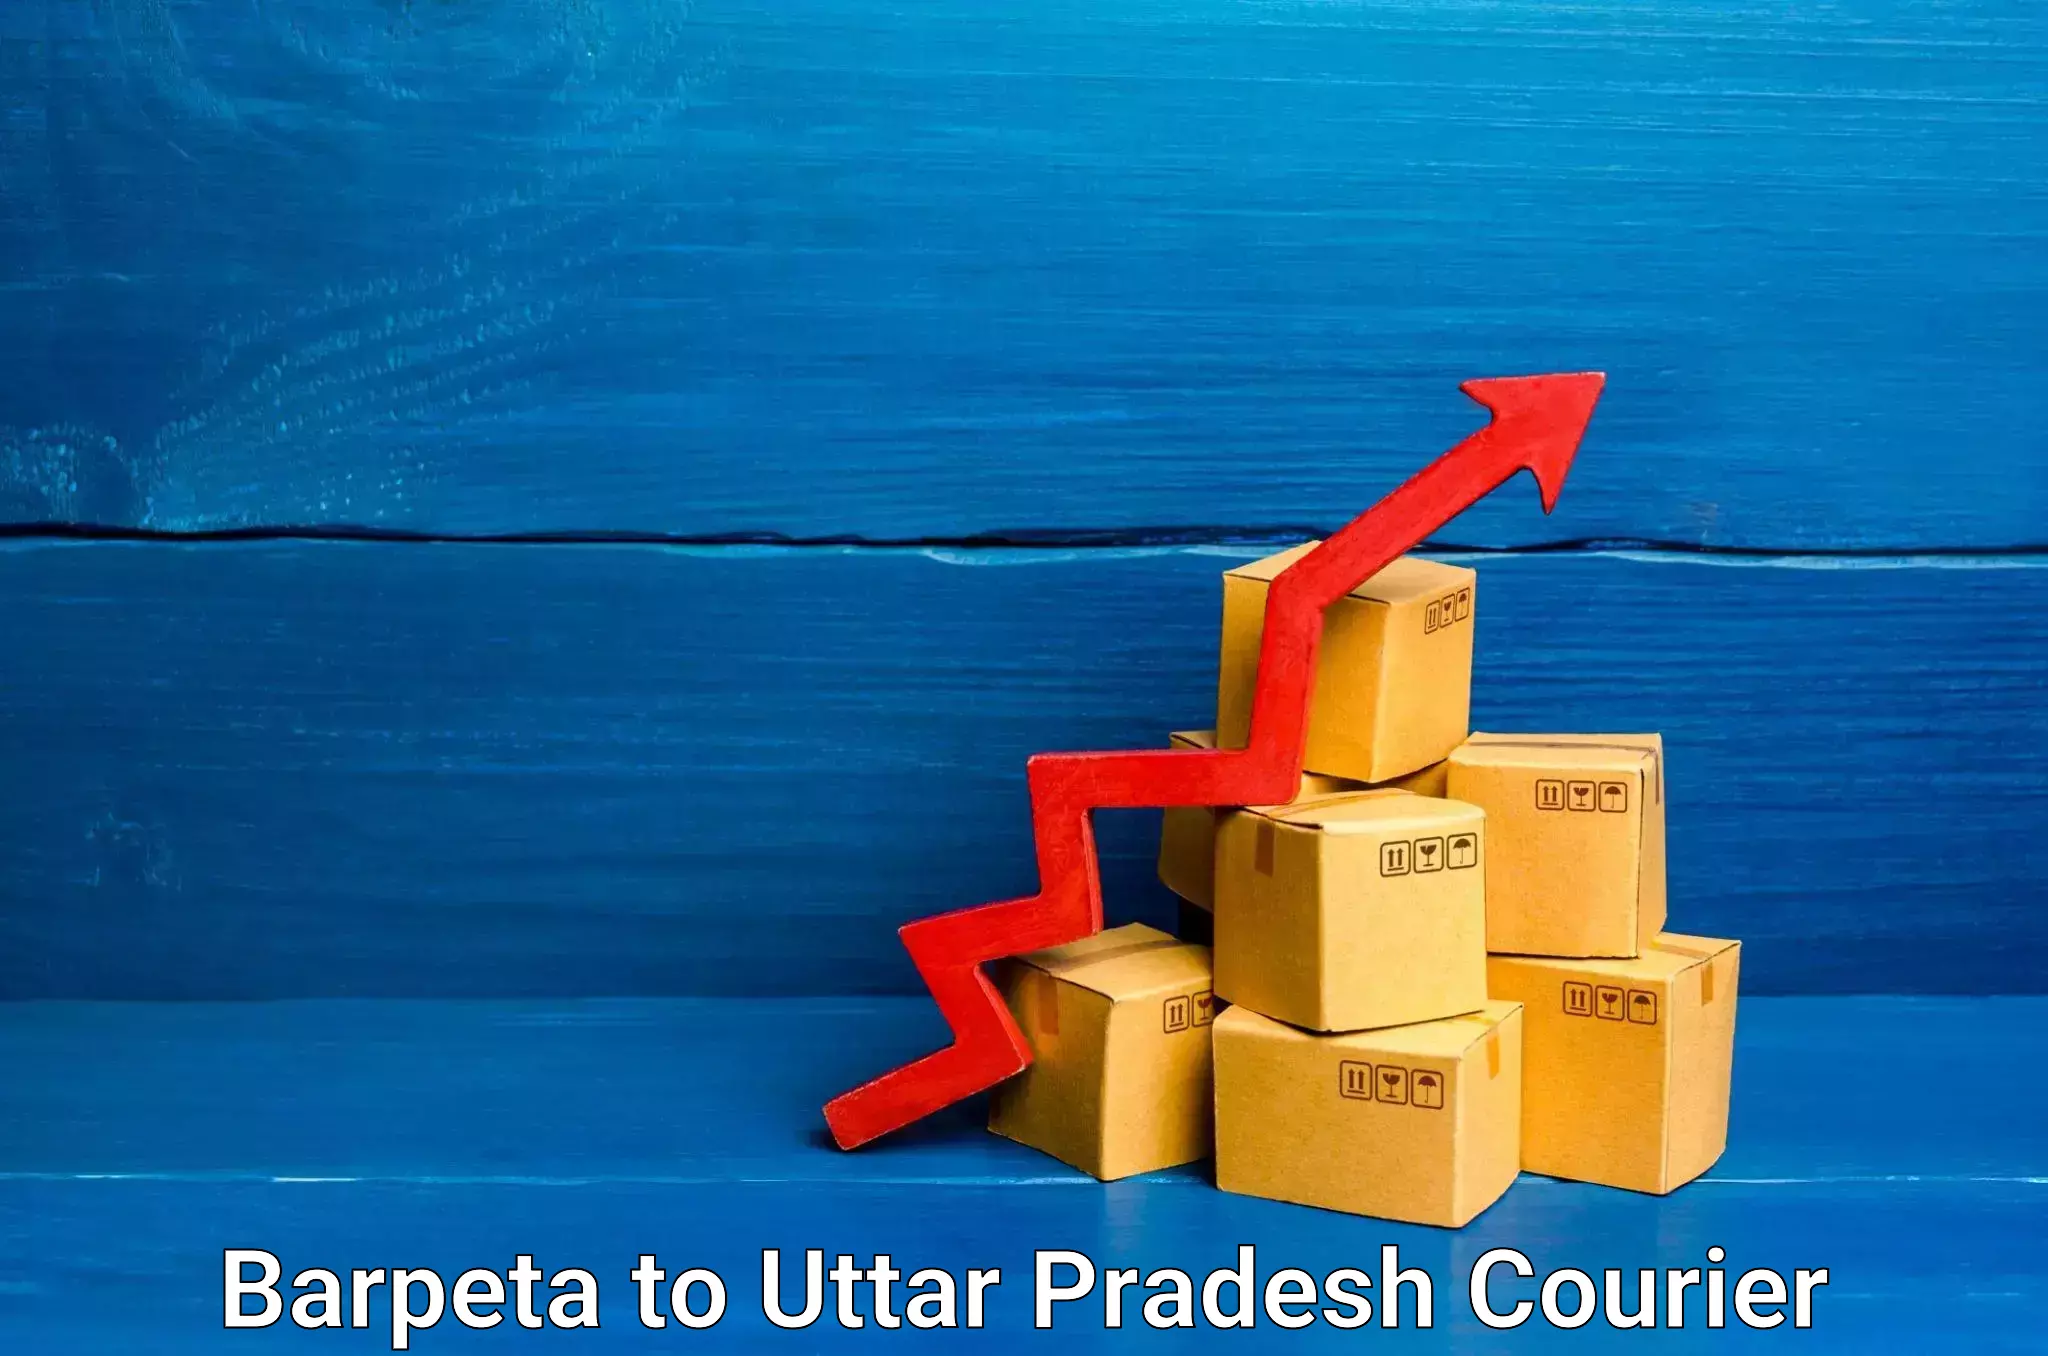 High-speed parcel service Barpeta to Agra